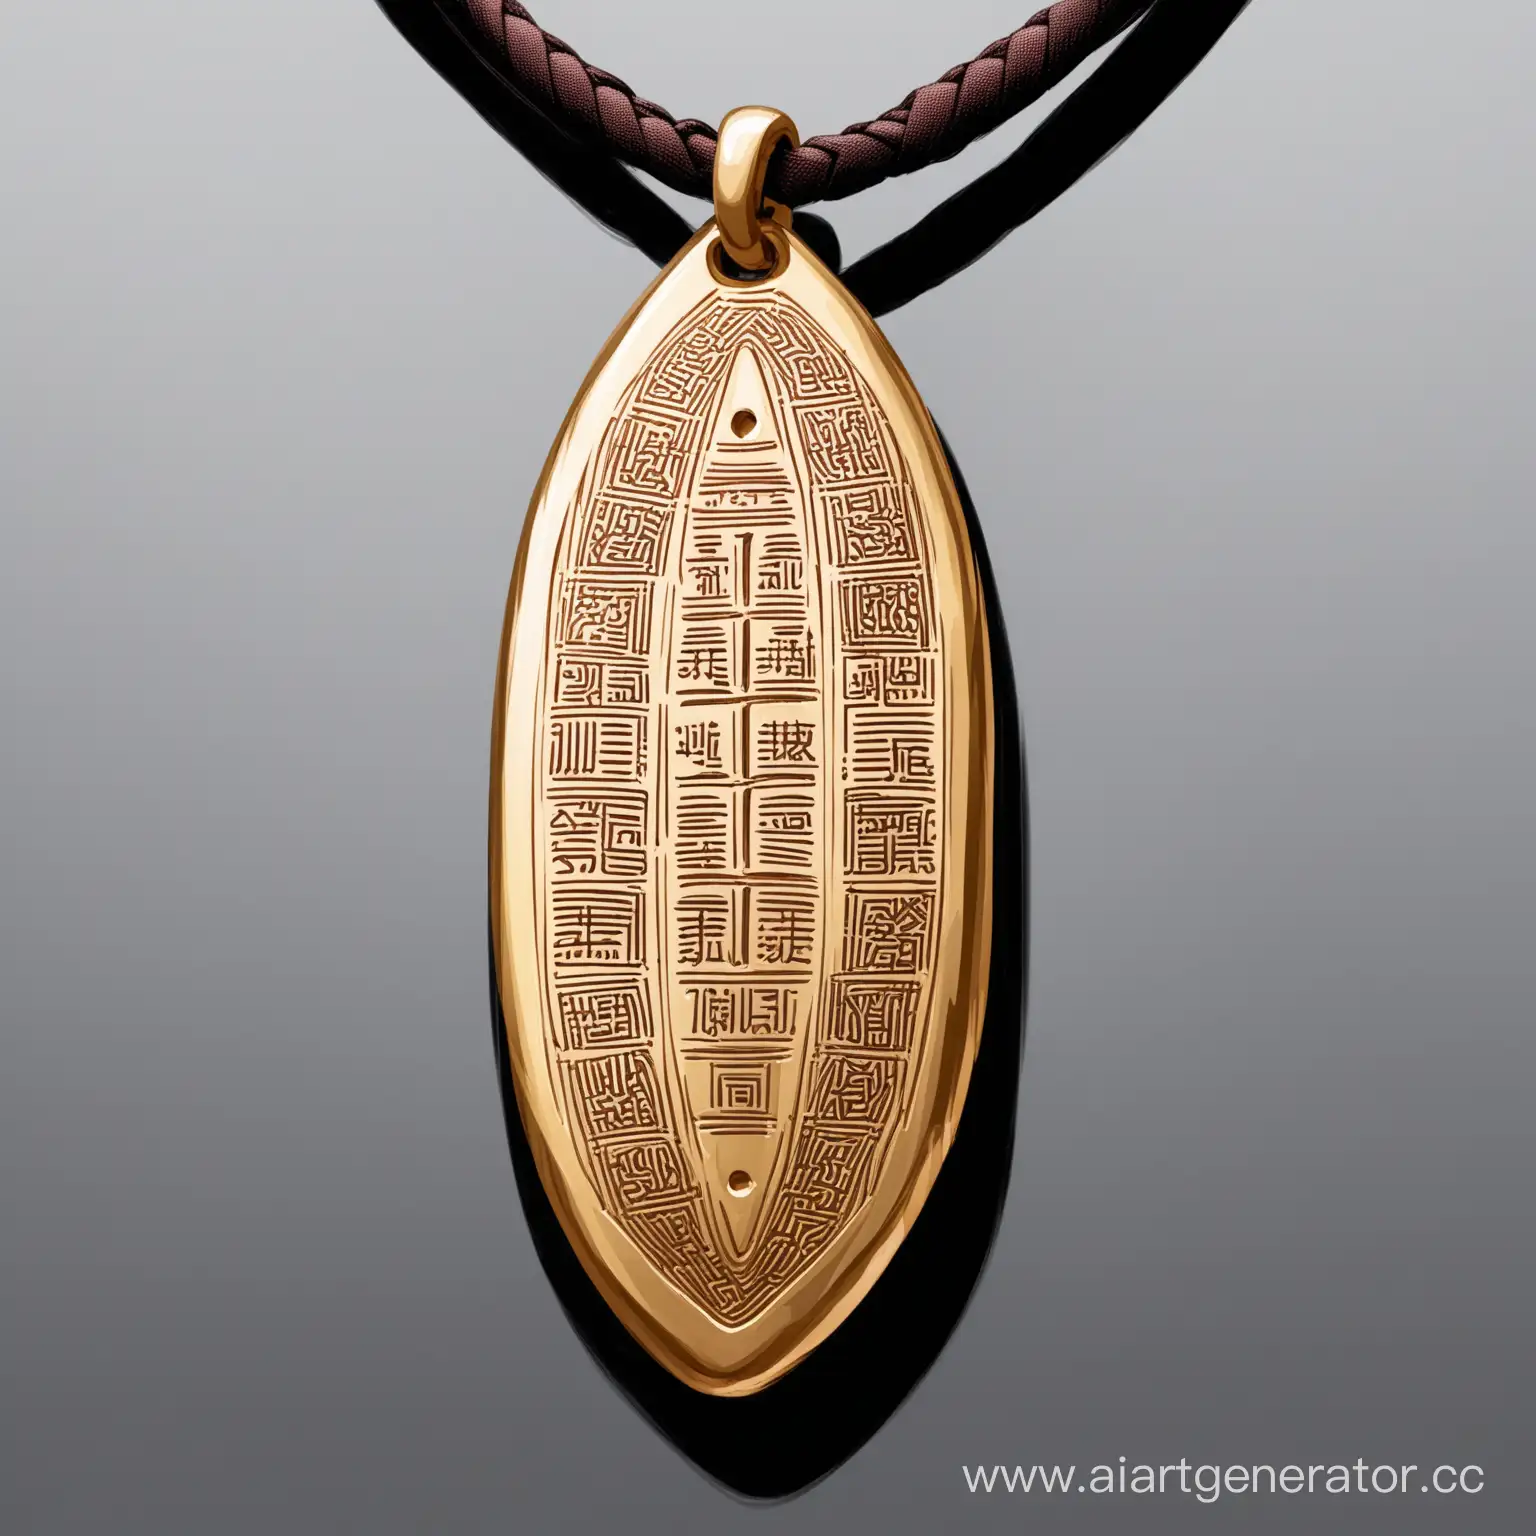 Elegant-Engraved-Amulet-with-Intricate-Signage